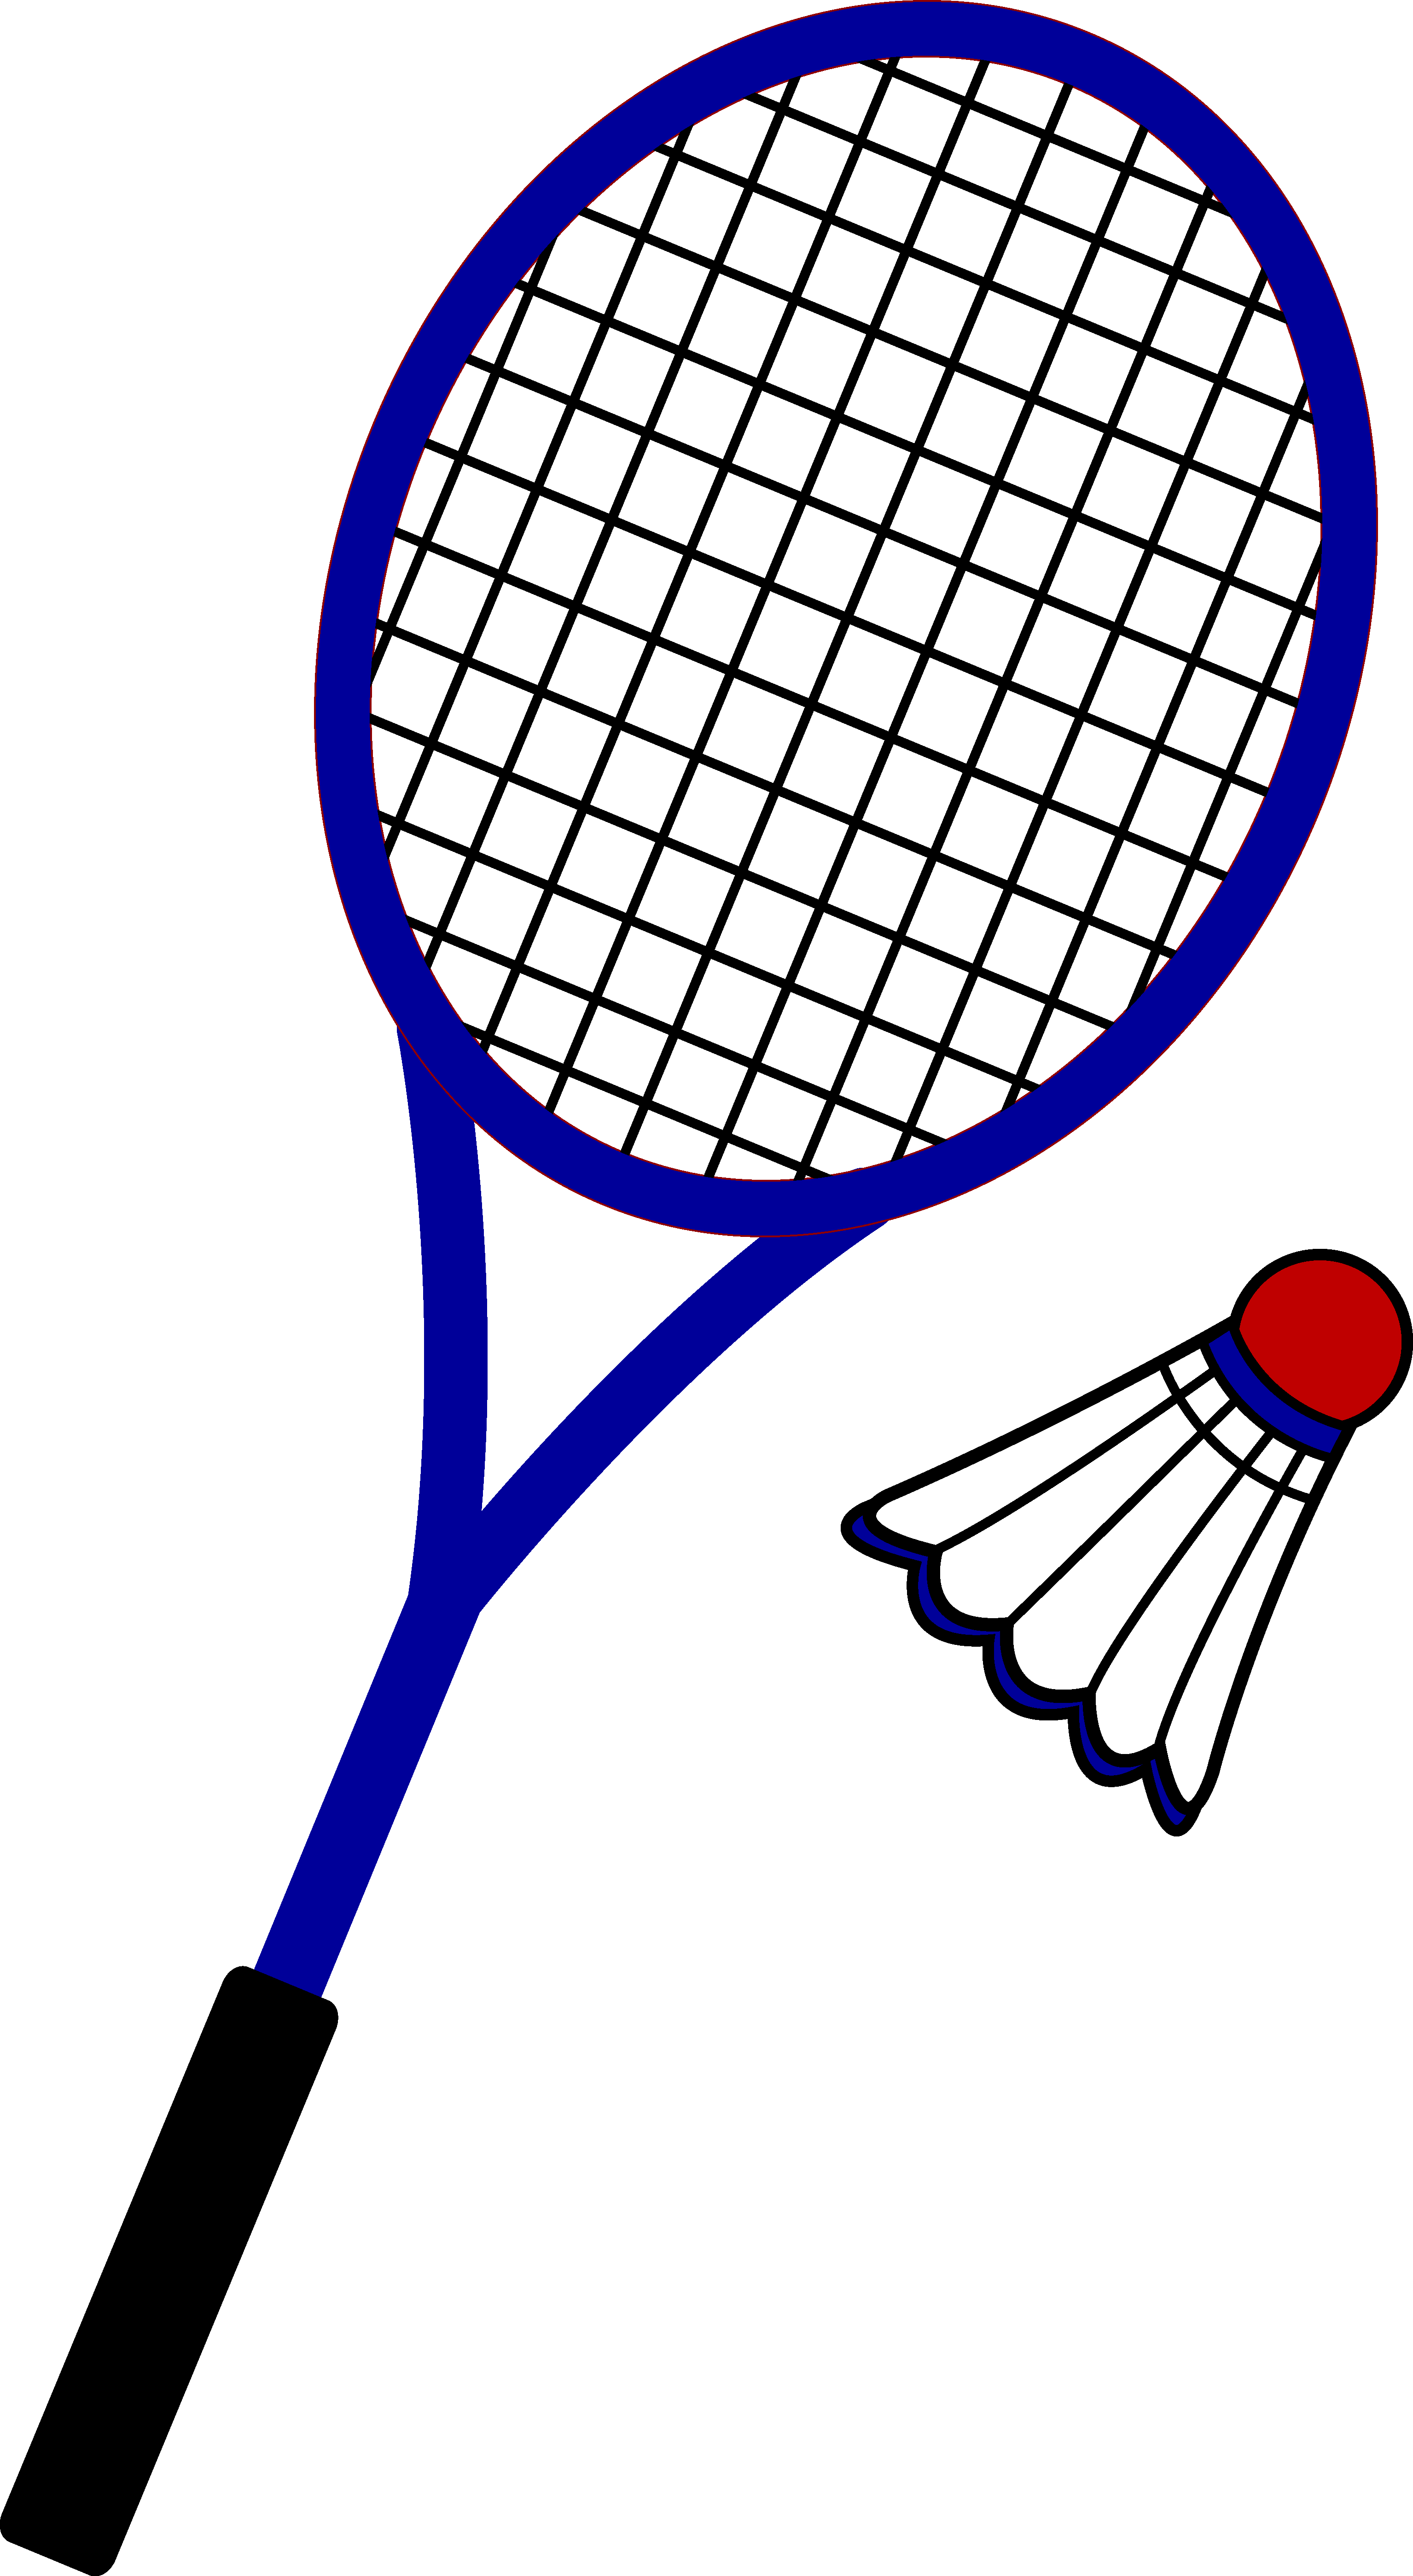 Badminton is the best sport i